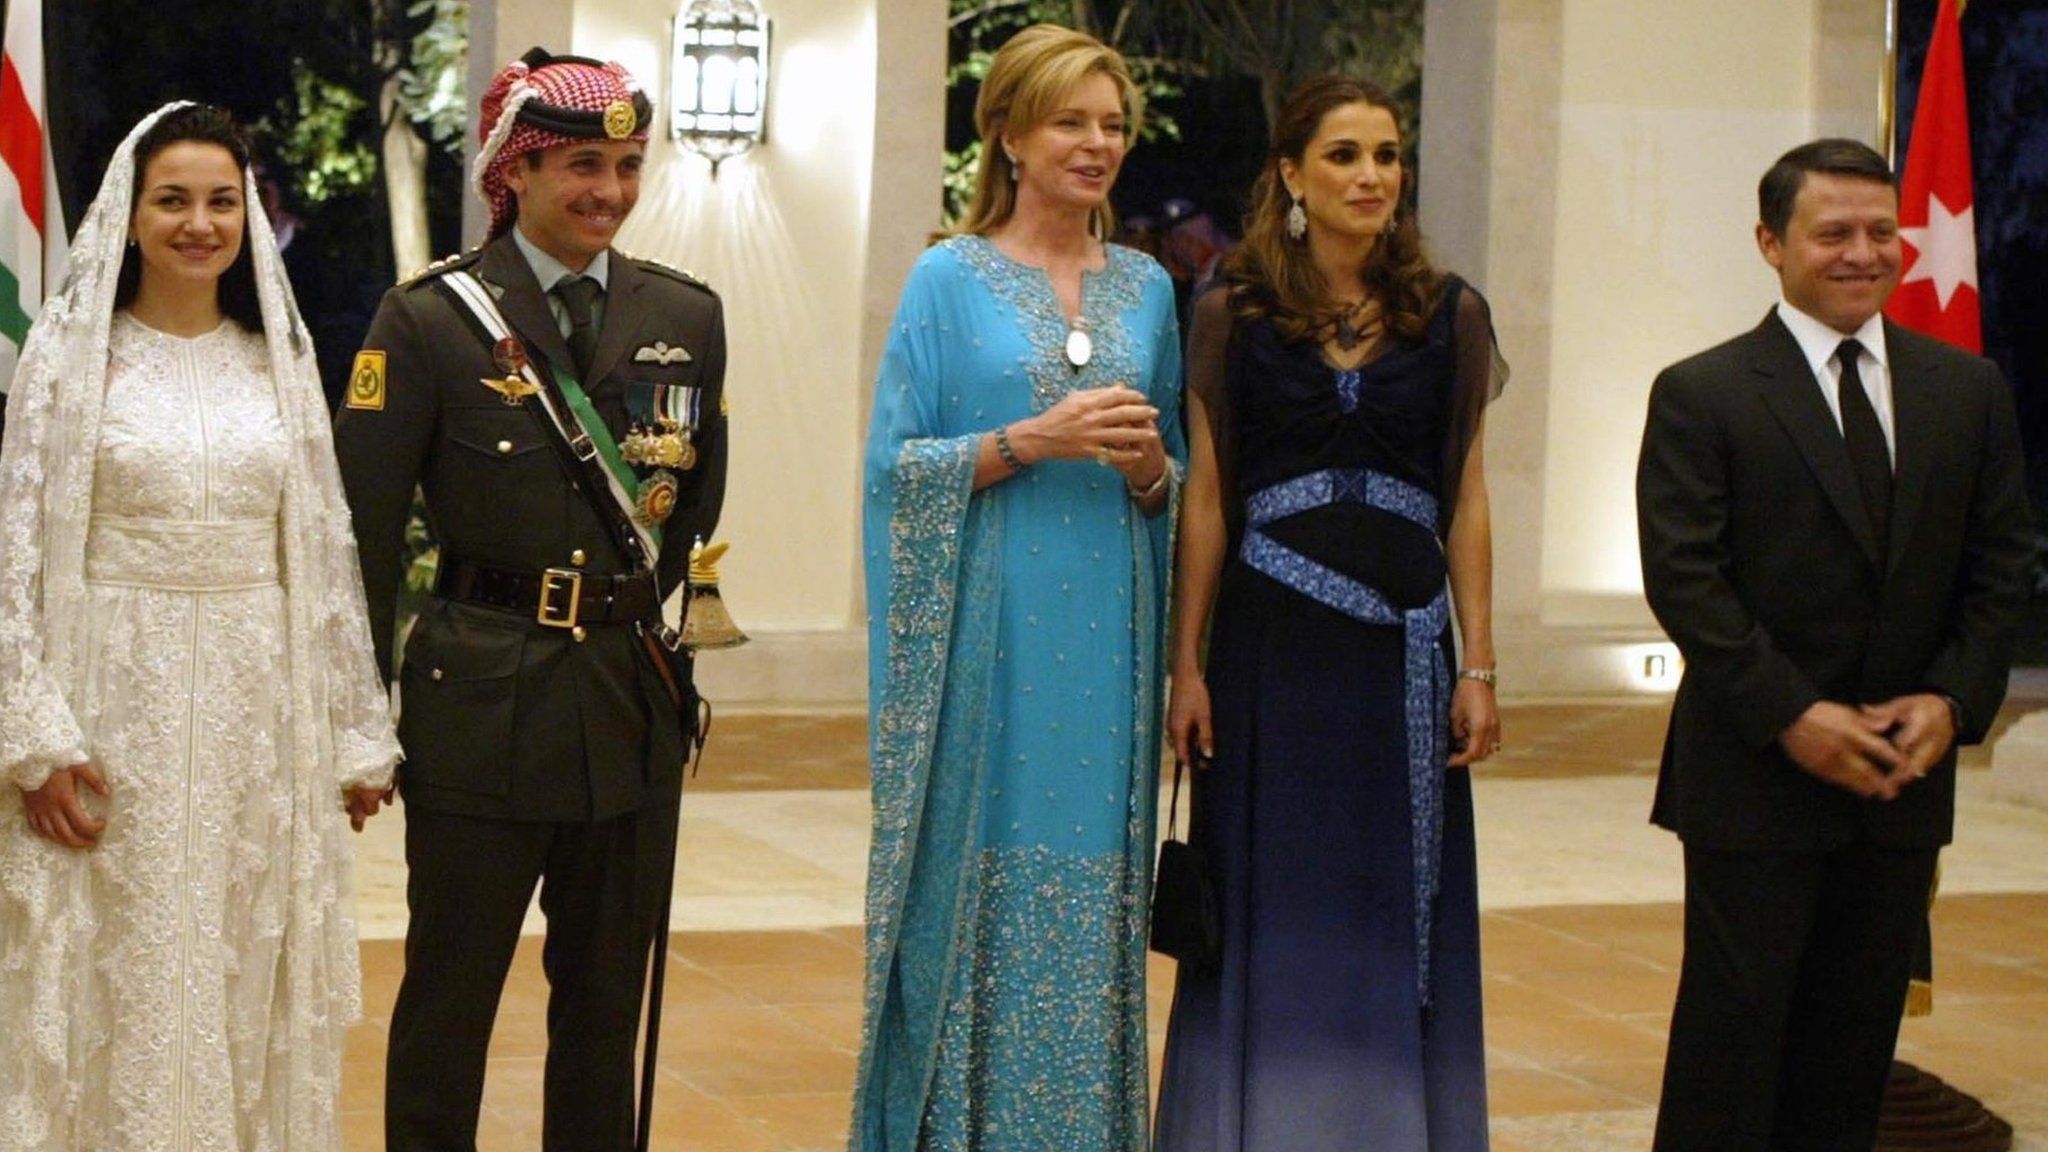 Jordan's King Abdullah II, his wife Queen Rania, Queen Noor, mother of the groom, Crown Prince Hamzah, the groom, his bride Princess Noor, Sherif Asem bin-Nayef and his ex-wife Firouzeh Vokhshouri, parents of the bride, attend the royal wedding on May 27, 2004 in Amman, Jordan